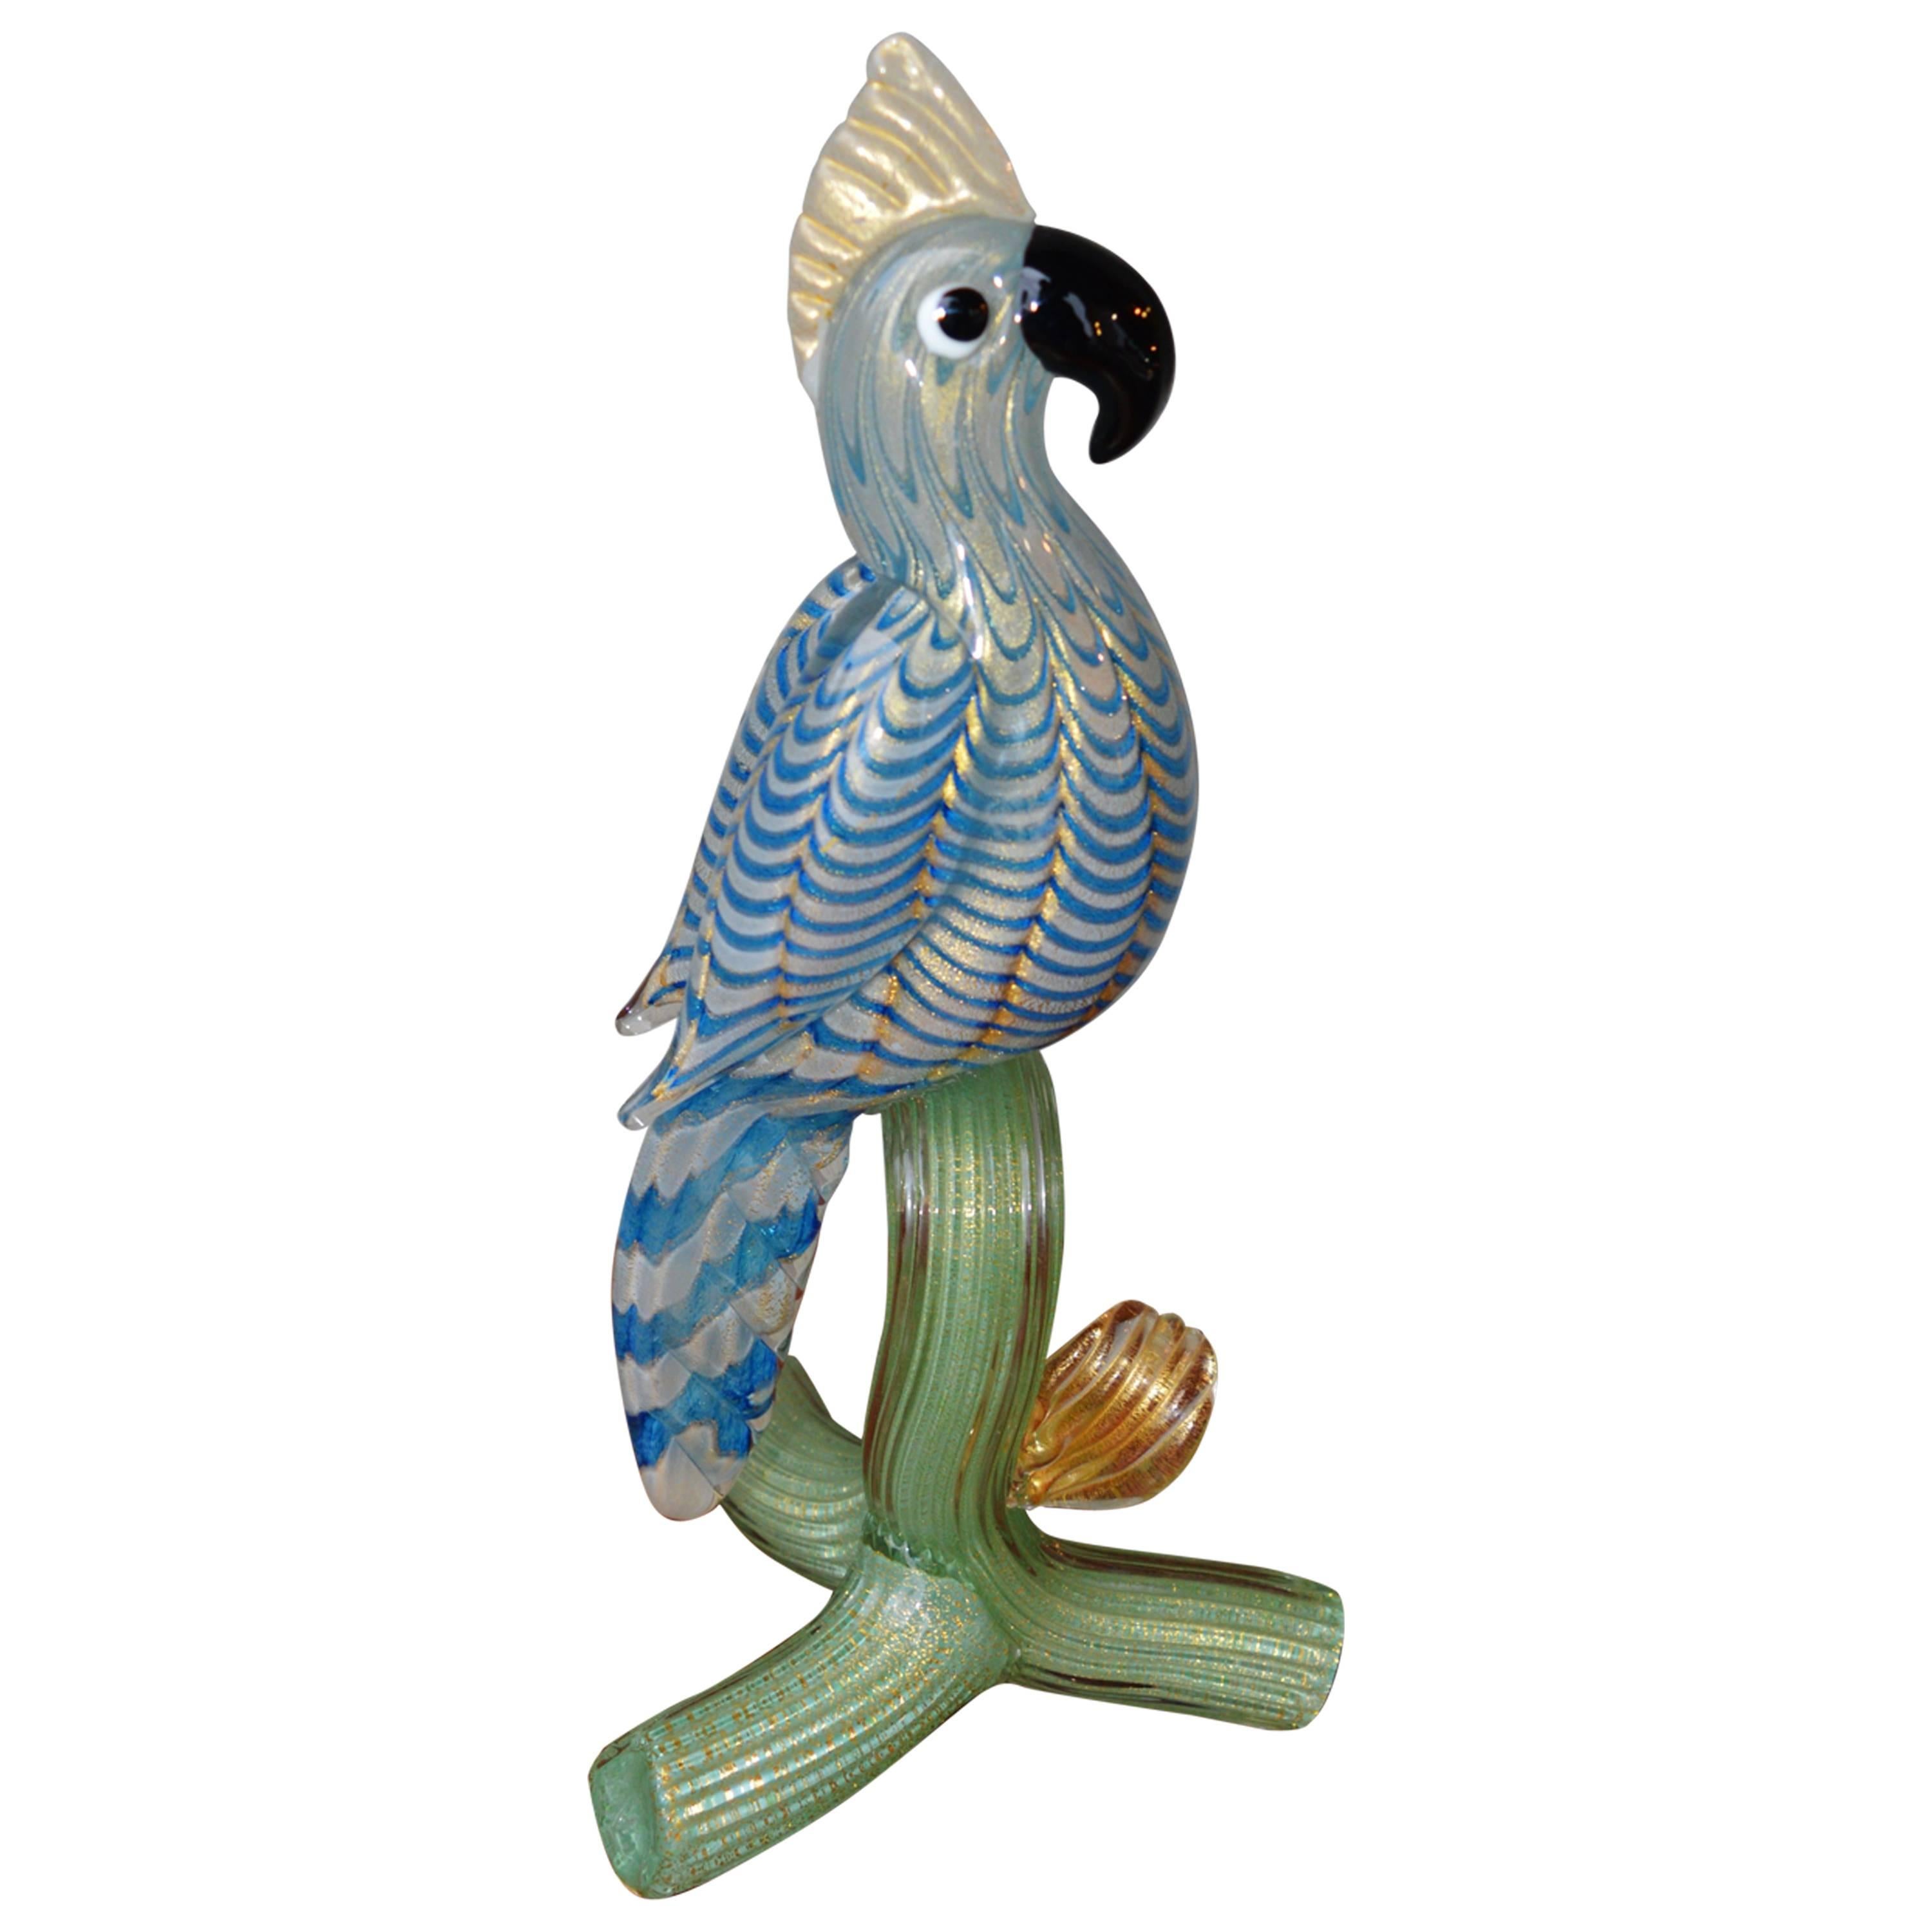 Murano Parrot Blue Green Art Glass Figurine, Barovier e Toso Attributed, Italian